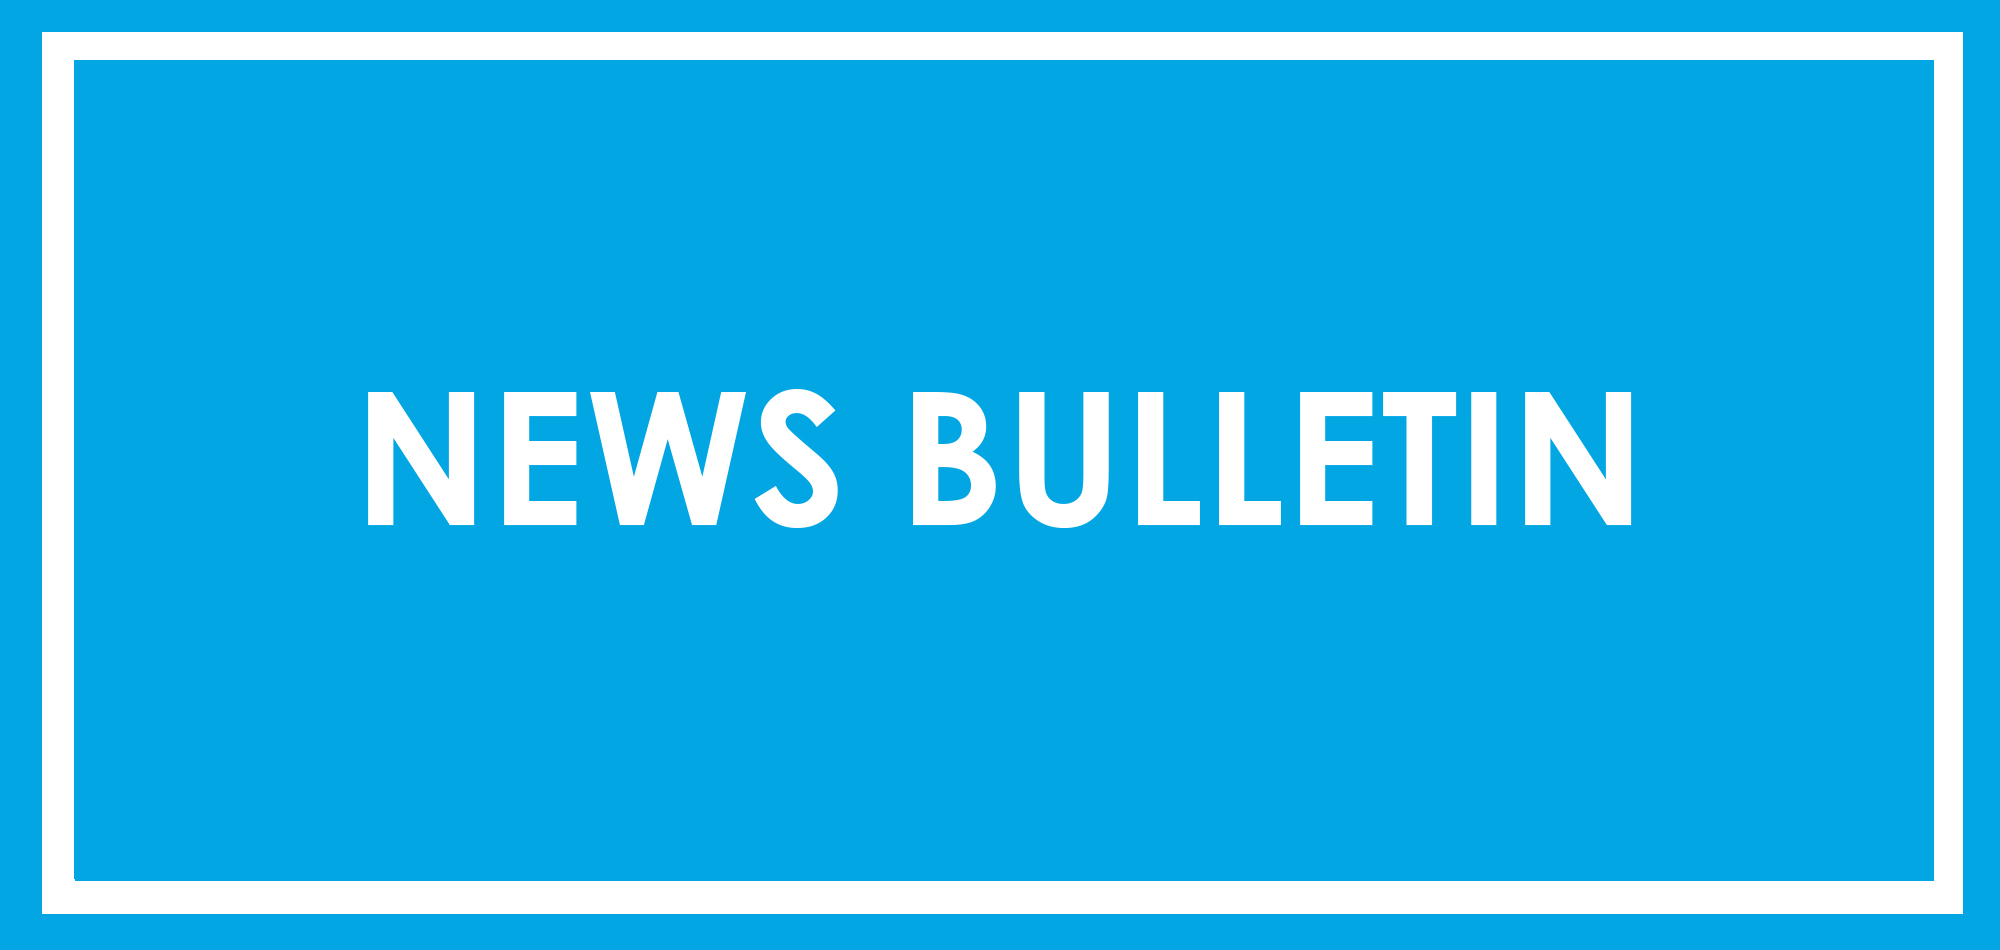 News Bulletin - 18.01.21